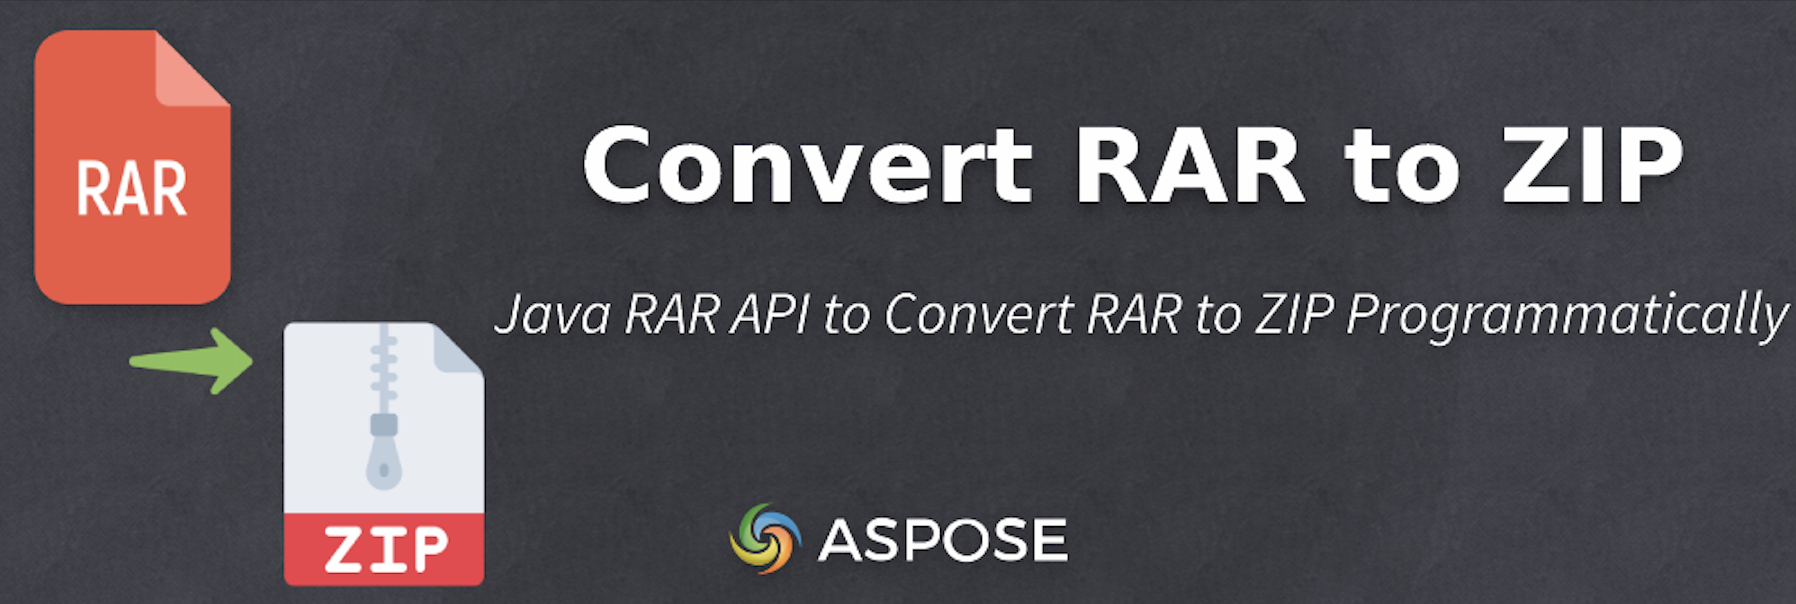 Convert RAR to ZIP in Java - Java RAR API